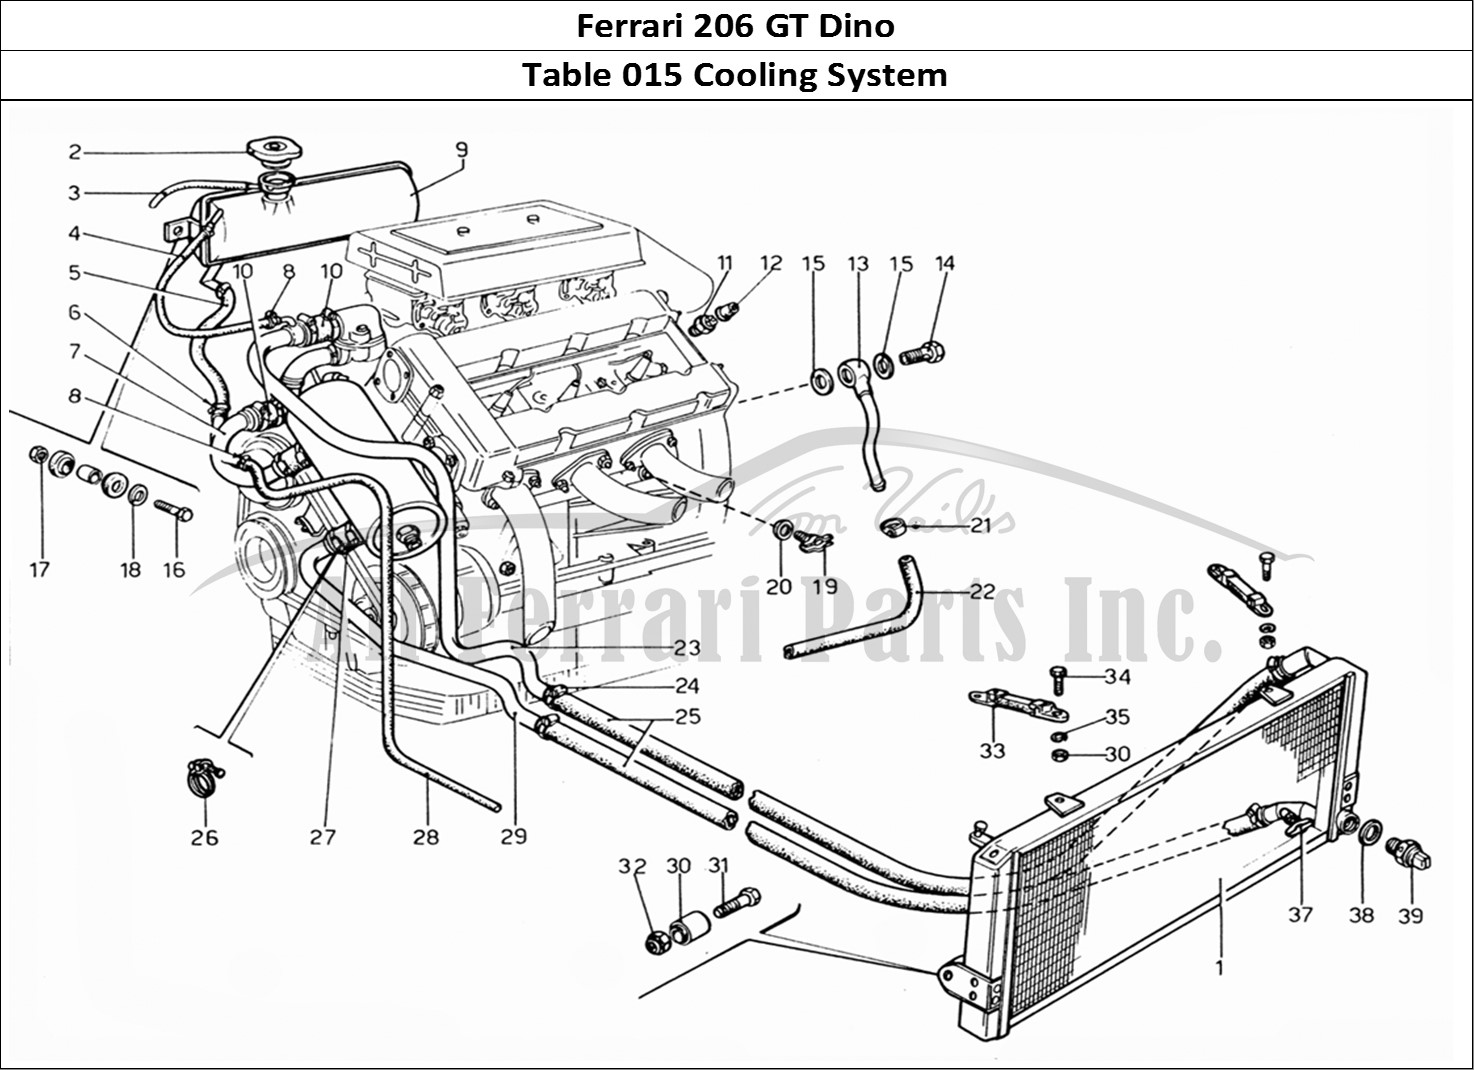 Ferrari Parts Ferrari 206 GT Dino (1969) Page 015 Cooling